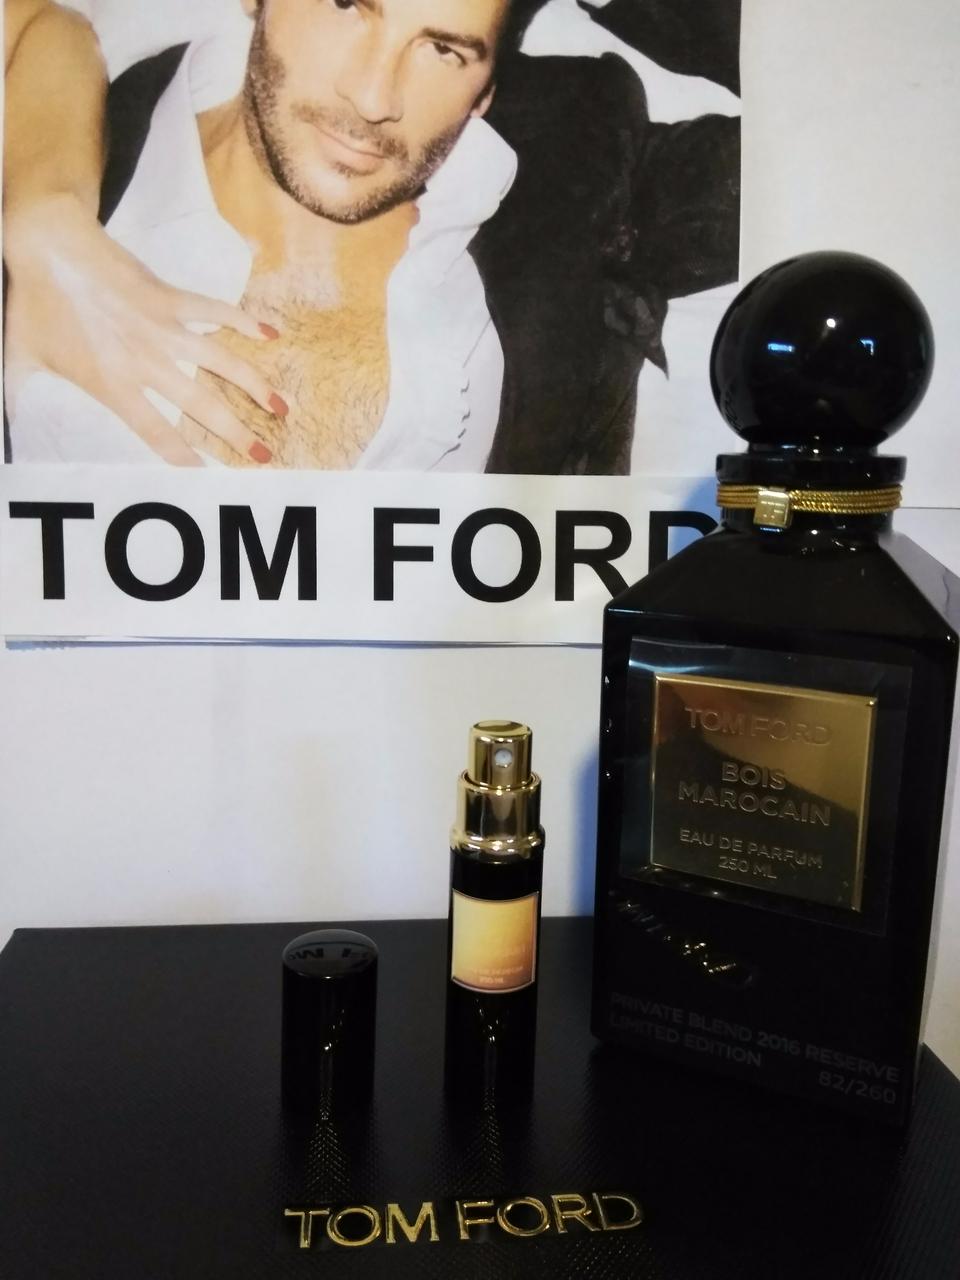 5ml BOIS MAROCAIN Authentic TOM FORD Perfume Spray Atomizer